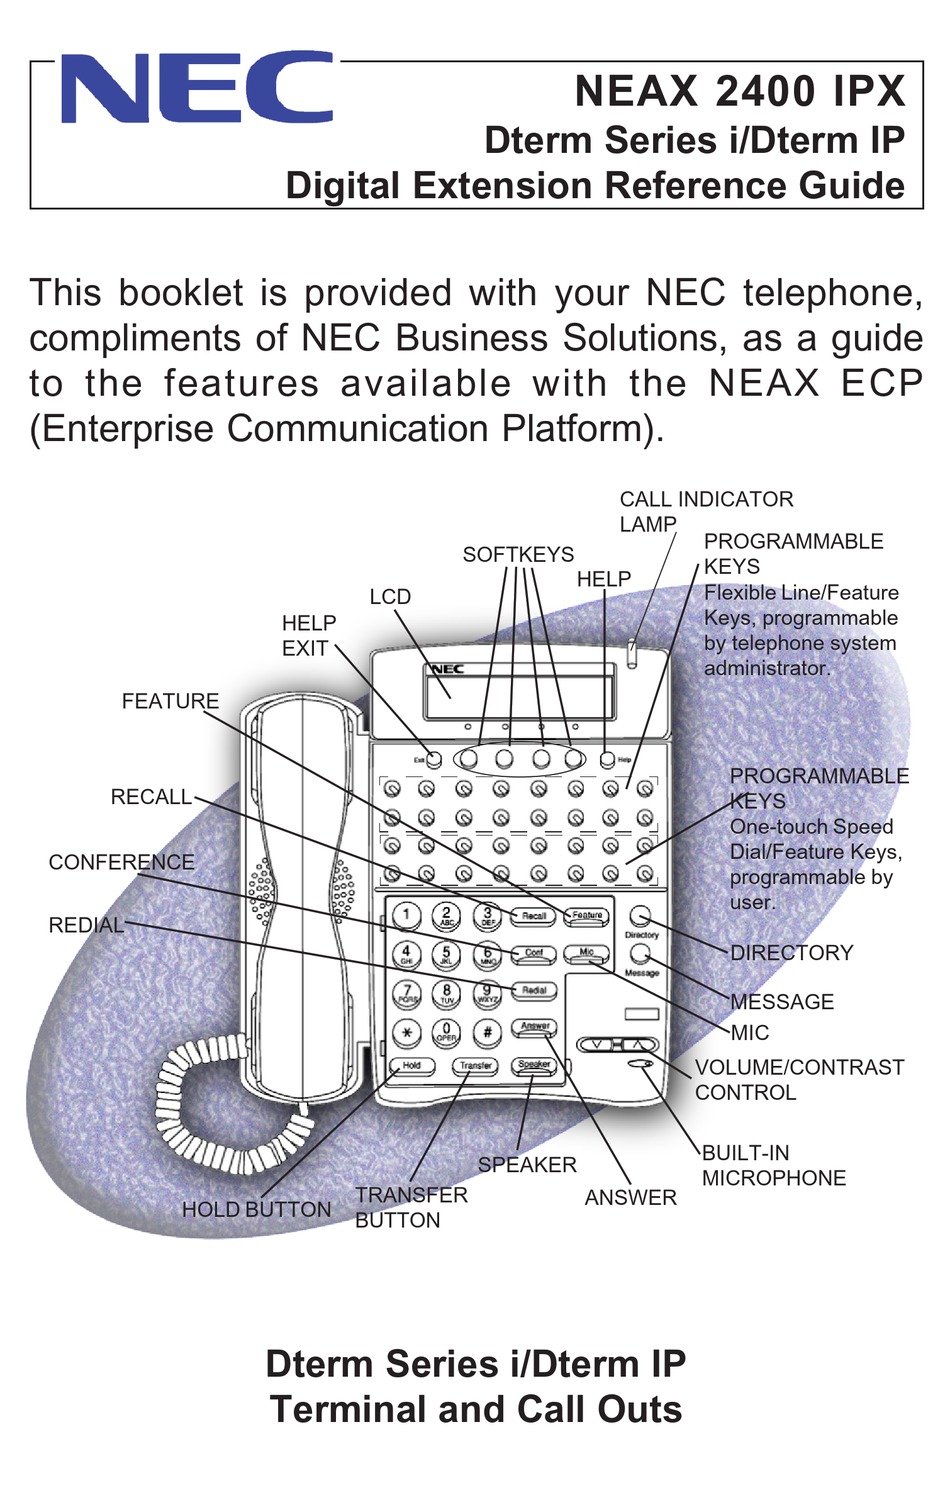 Nec Neax 2400 Ipx Reference Manual Pdf Download Manualib